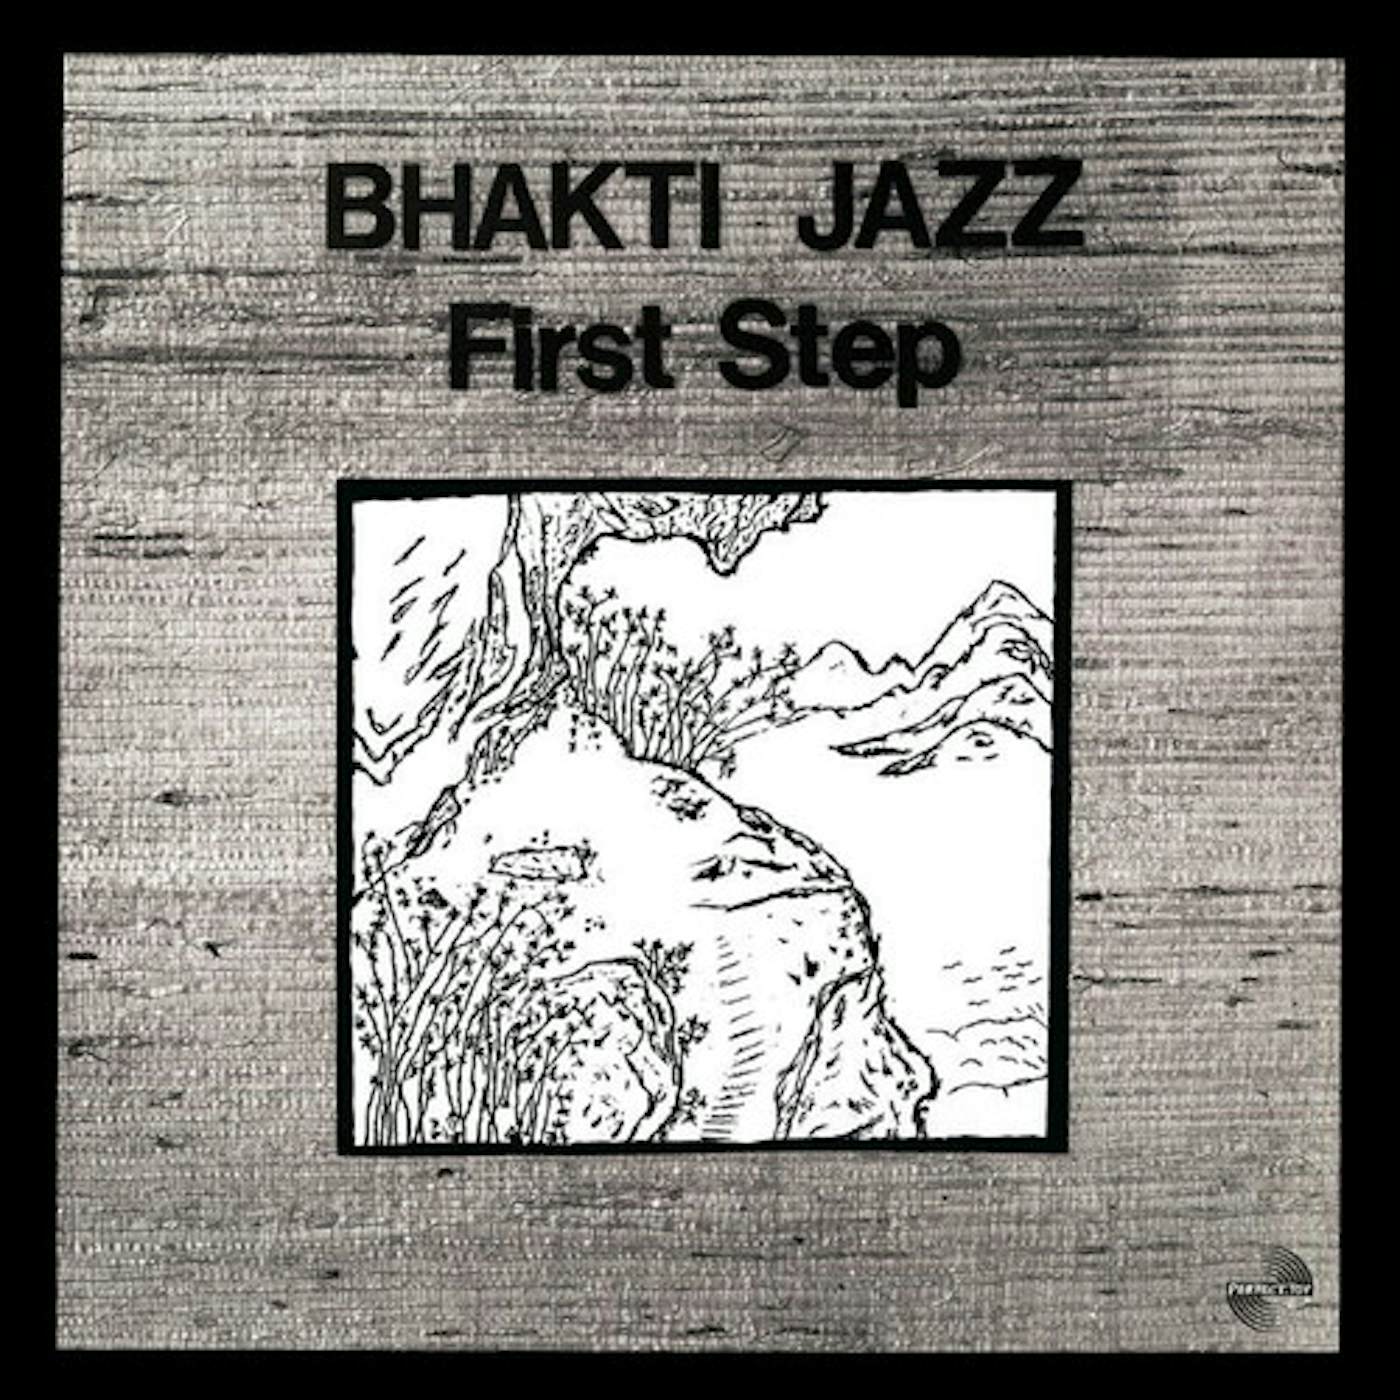 Bhakti Jazz First Steo Vinyl Record